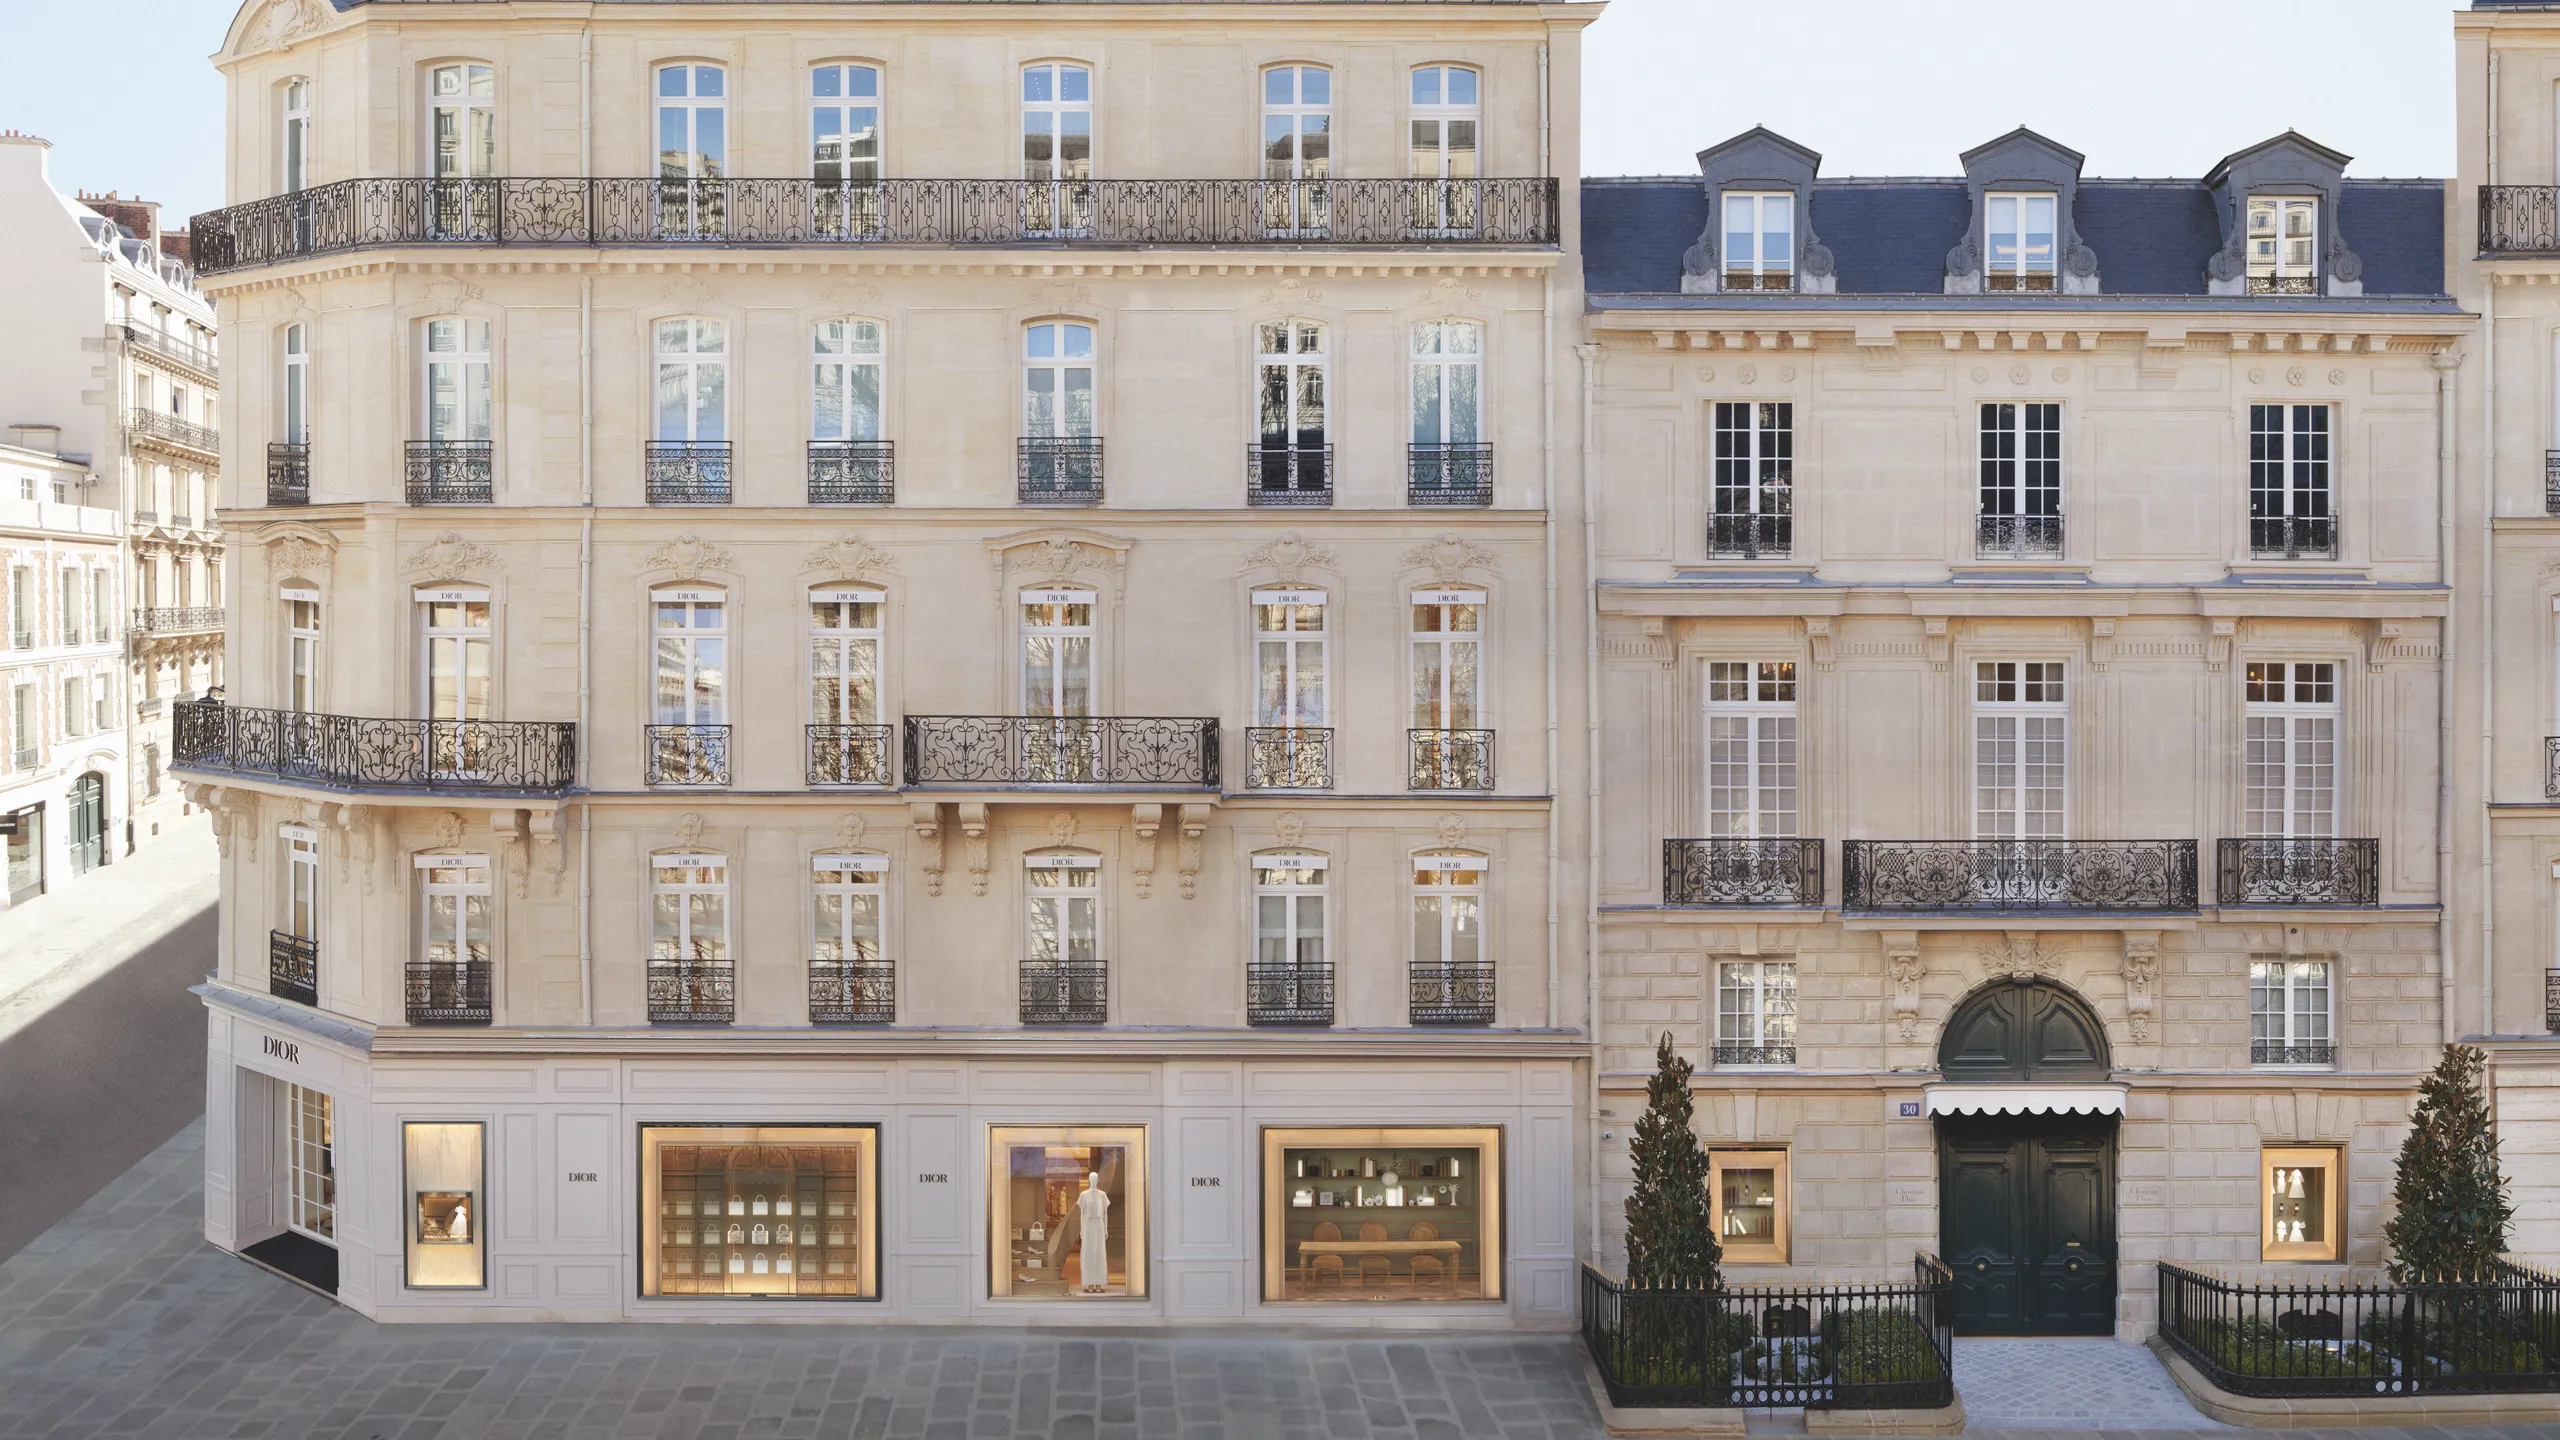 Paris Luxury Shopping Guide